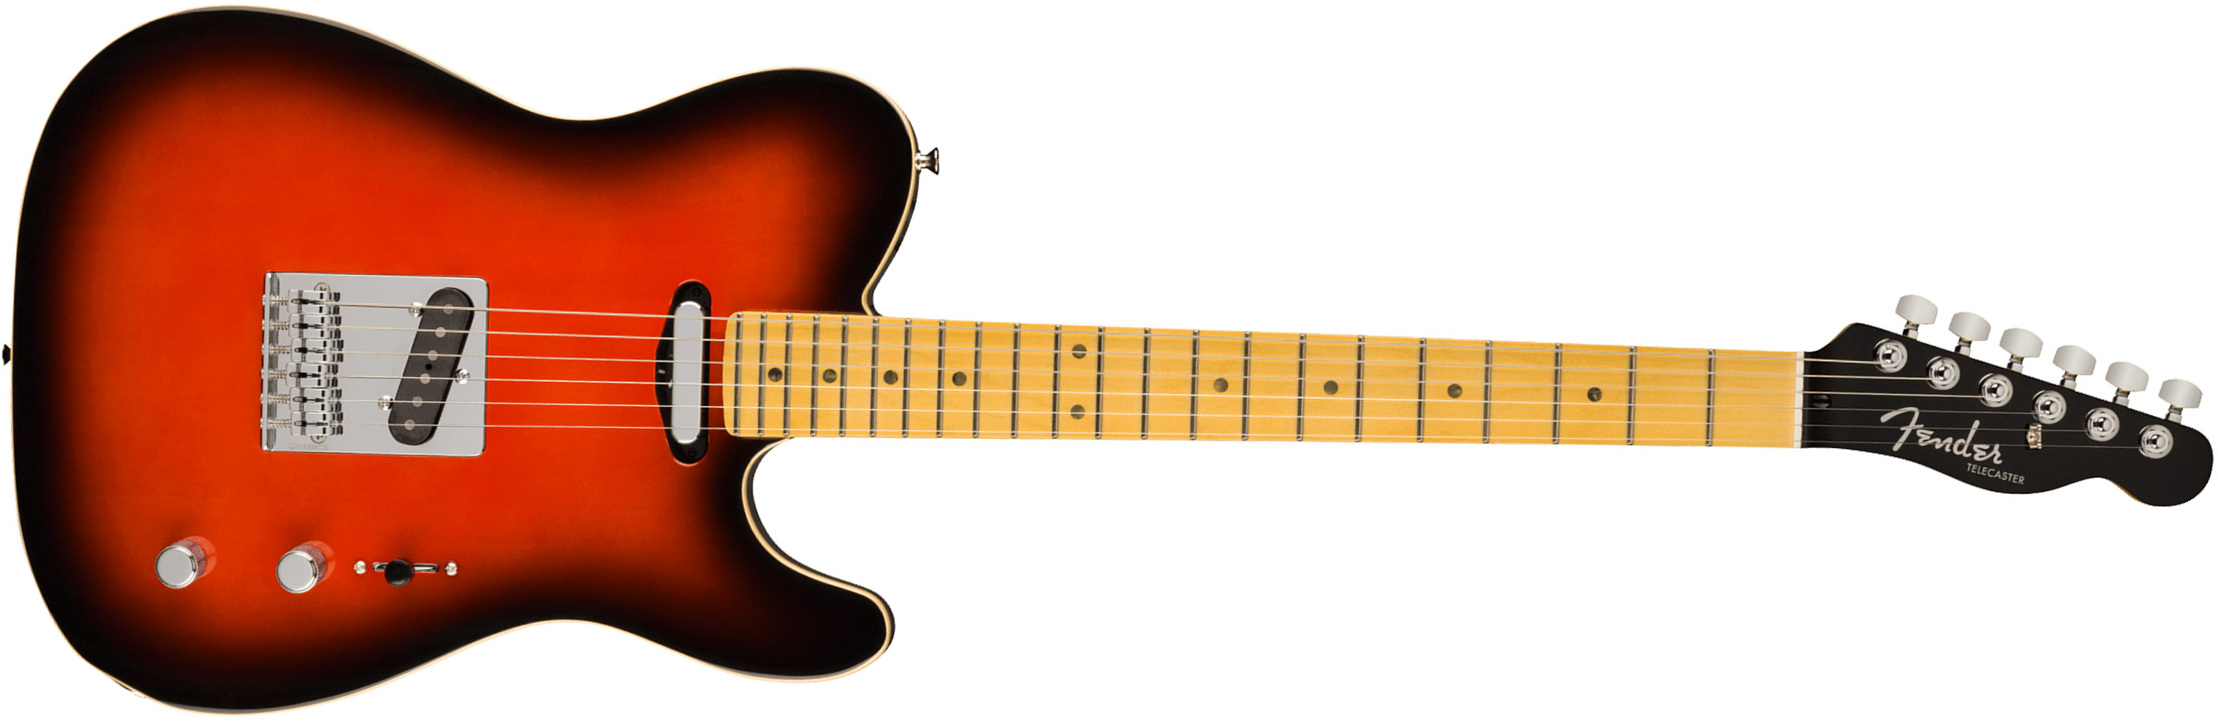 Fender Tele Aerodyne Special Jap 2s Ht Mn - Hot Rod Burst - Televorm elektrische gitaar - Main picture